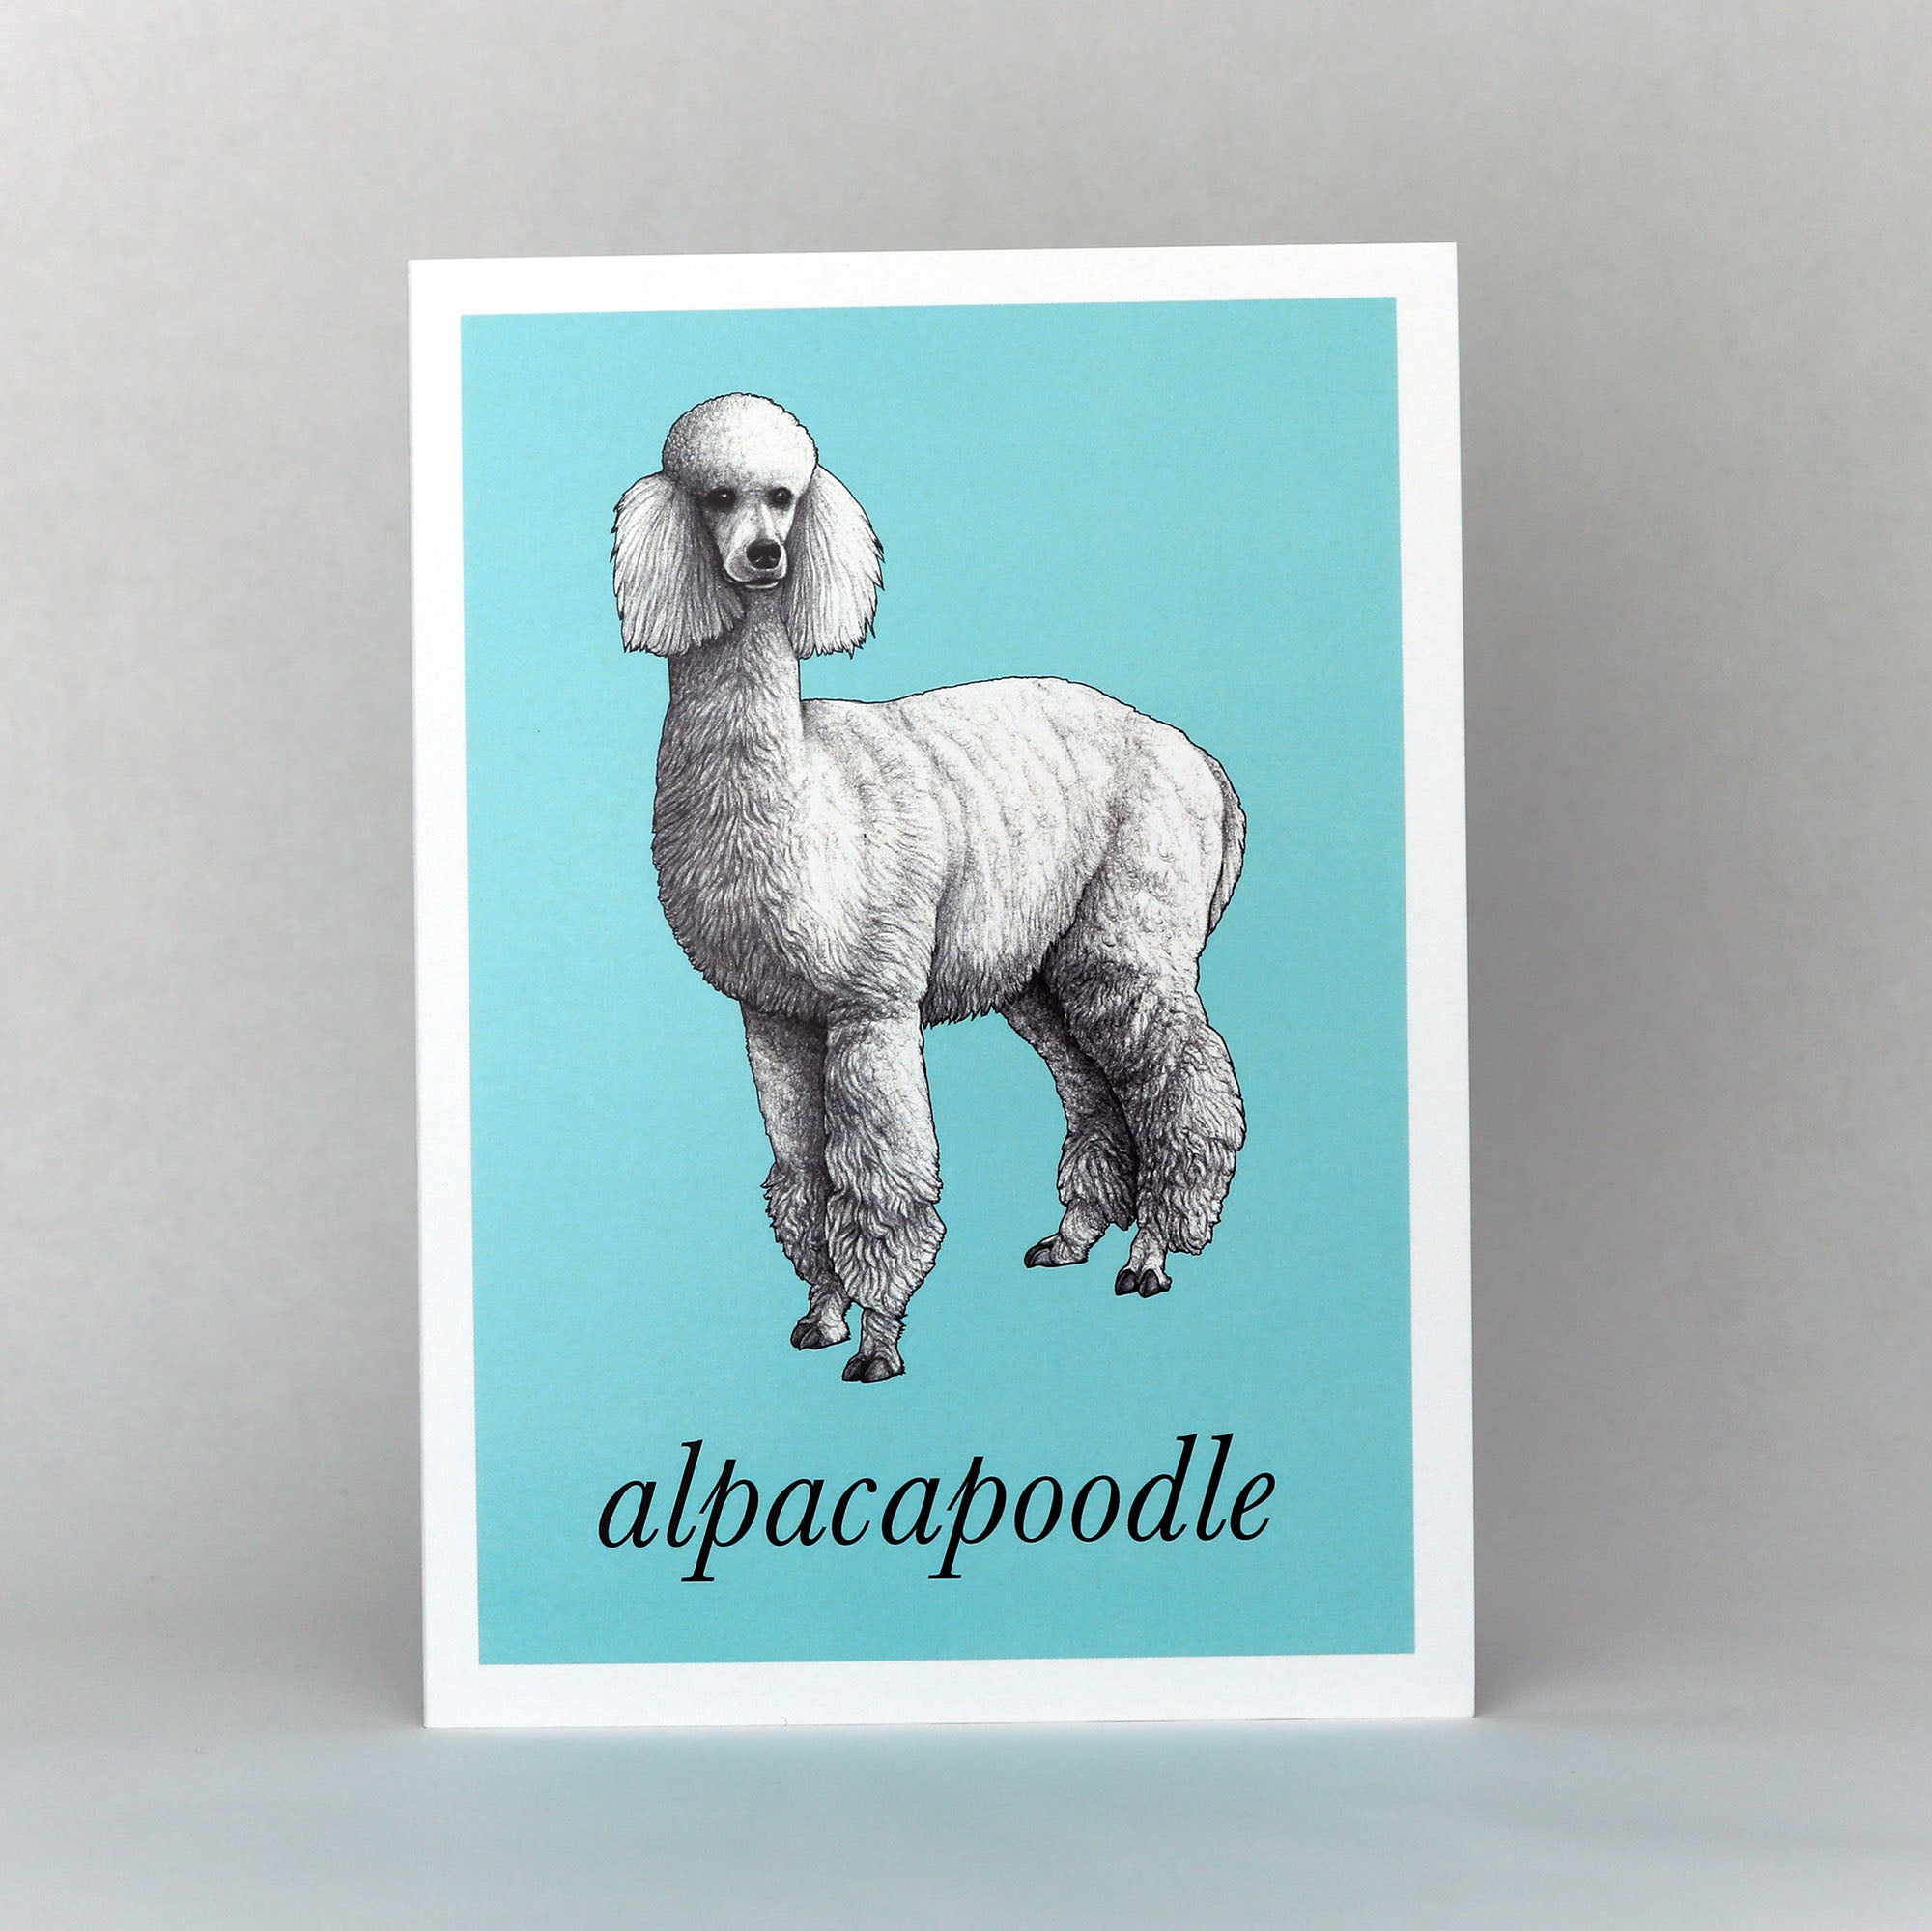 Alpacapoodle | Alpaca + Poodle Hybrid Animal | 5x7" Greeting Card